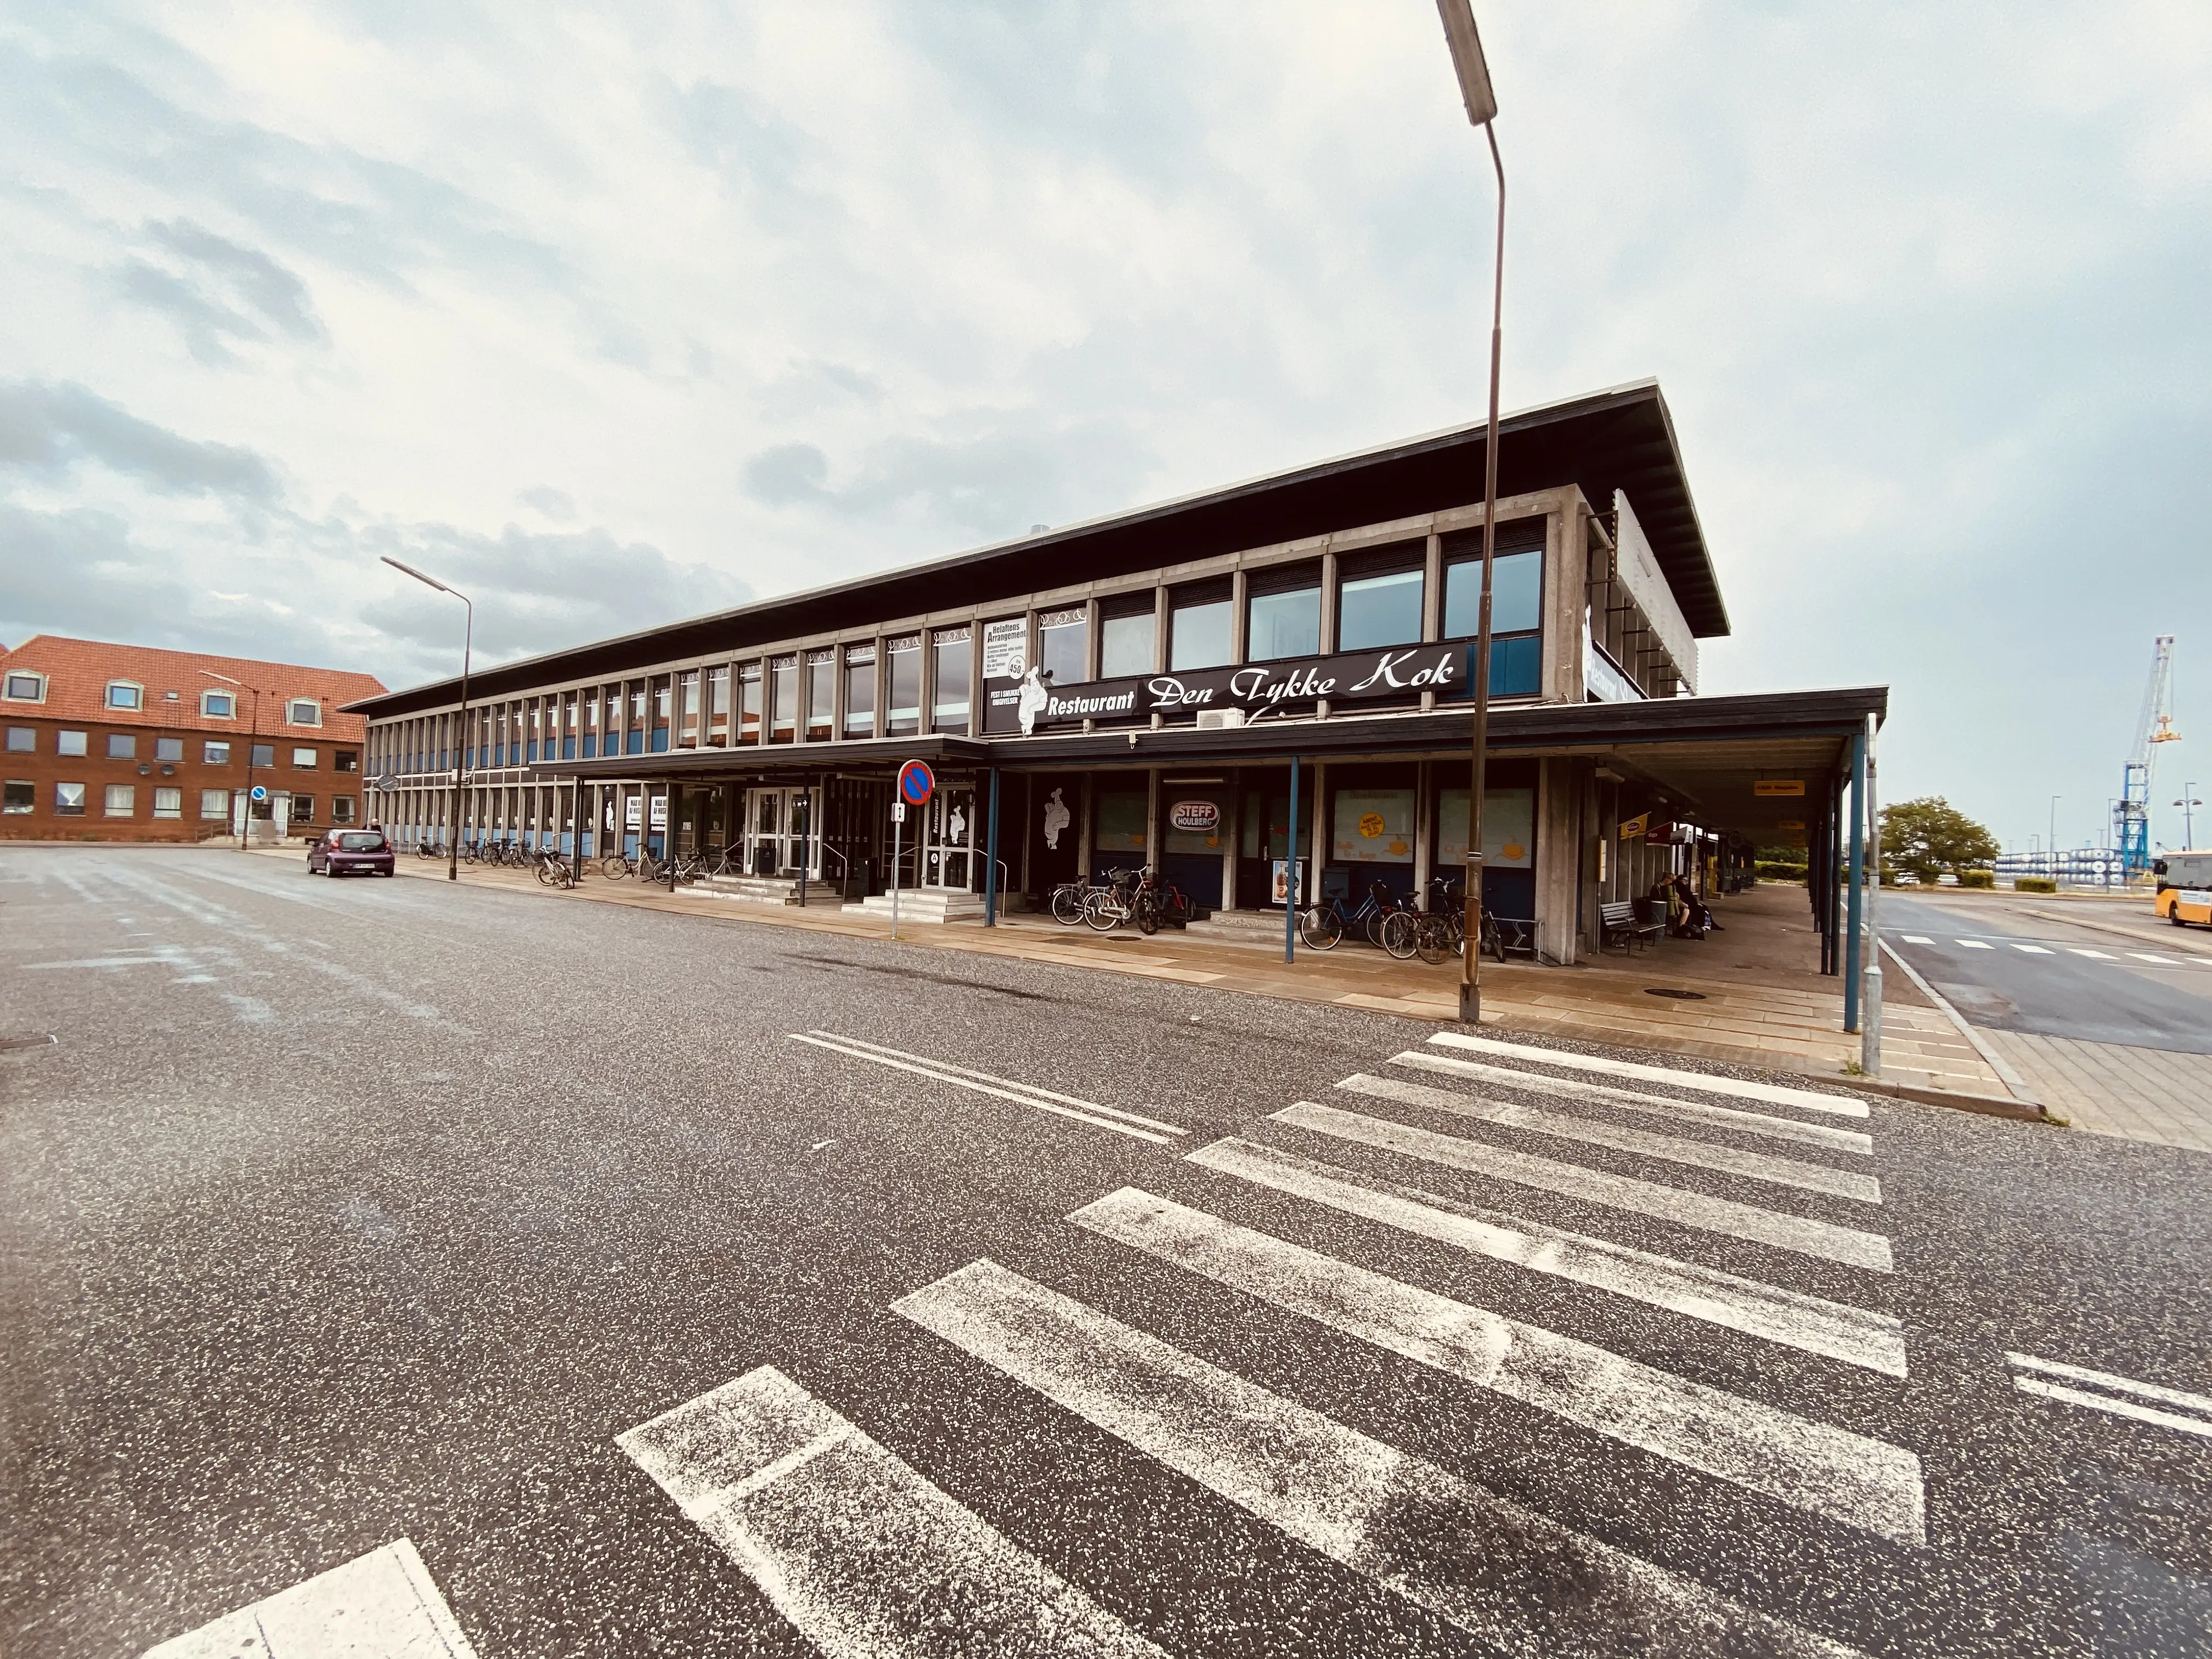 Kalundborg Station.